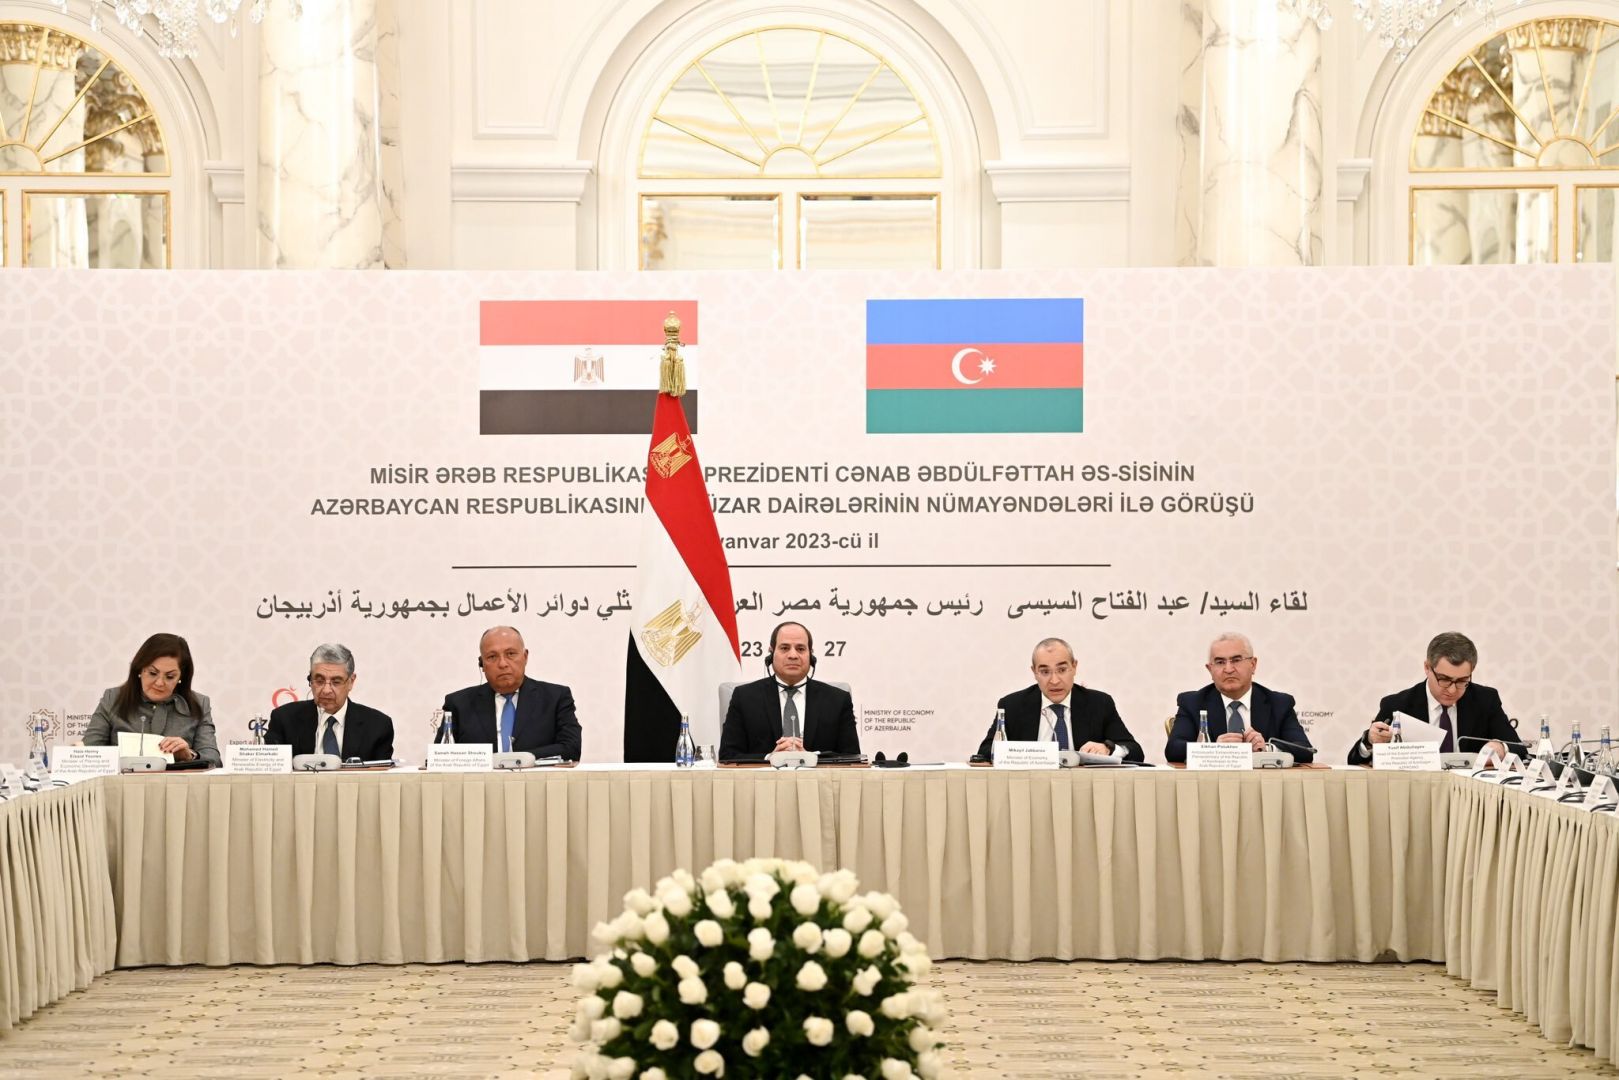 In al-Sisi's propria persona, Azerbaijani, Egyptian business circles mull deepening economic ties [PHOTOS]